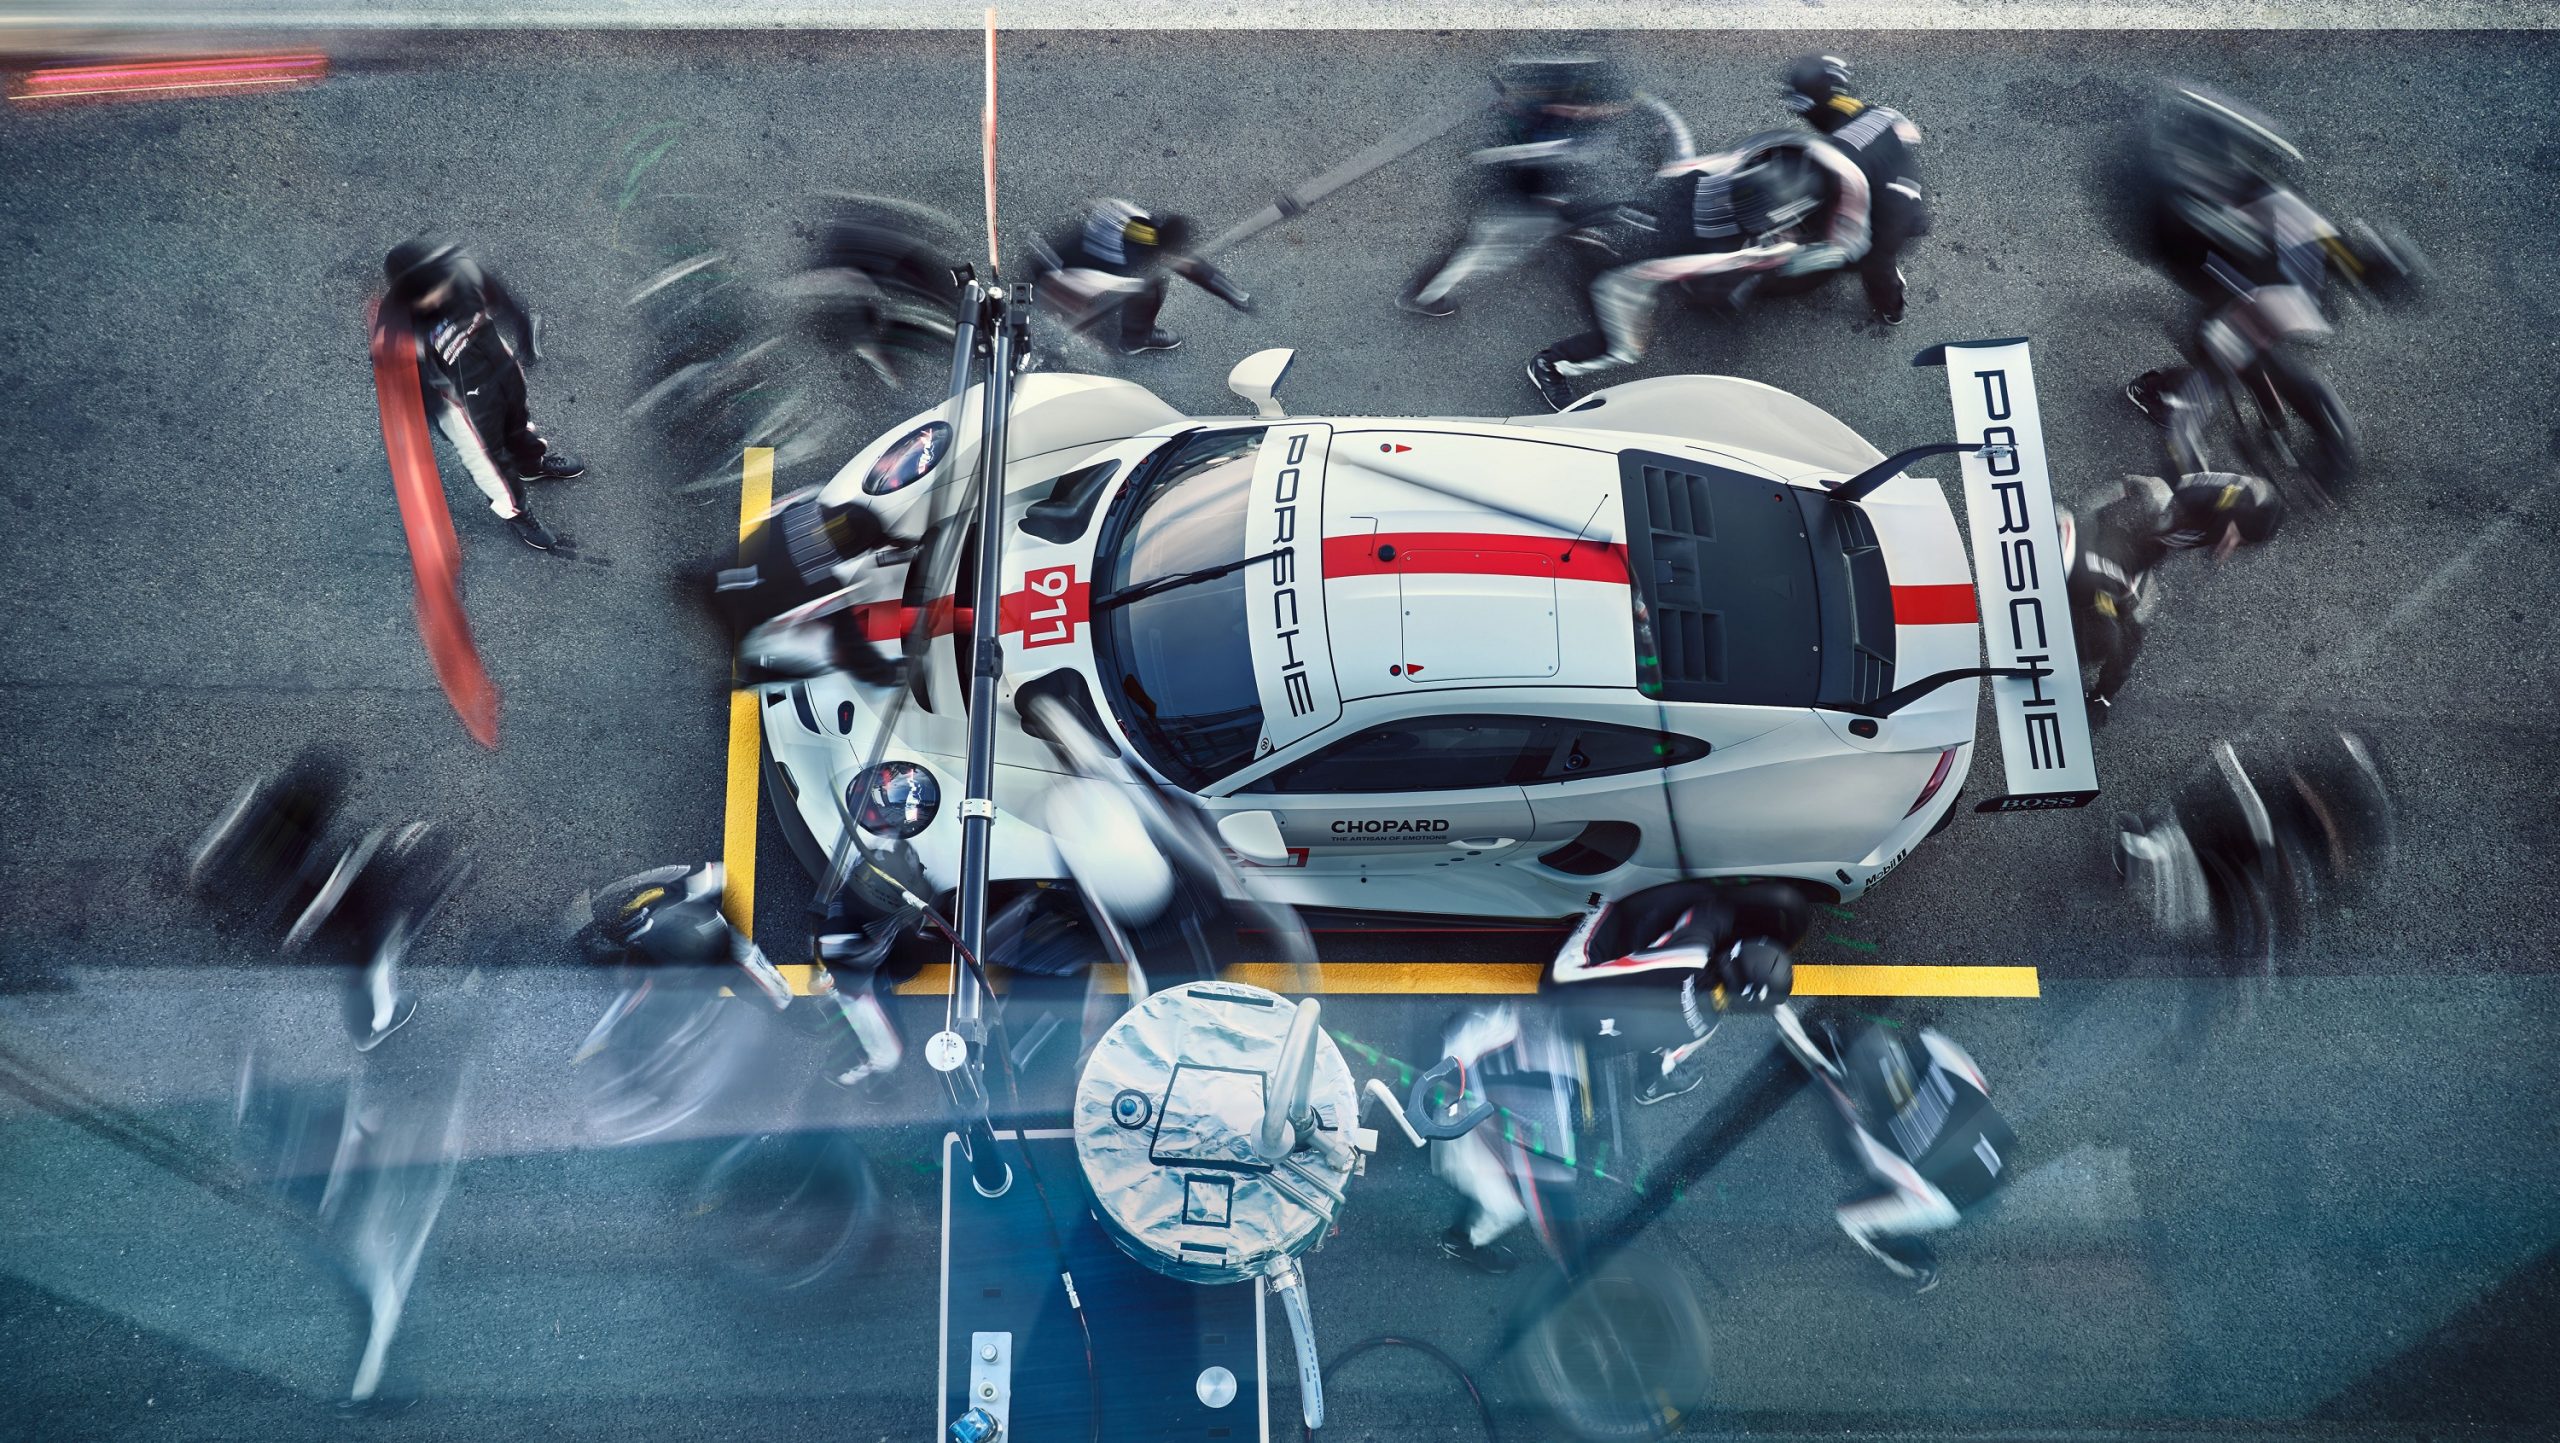 A white Porsche 911 RSR race car during a pit stop